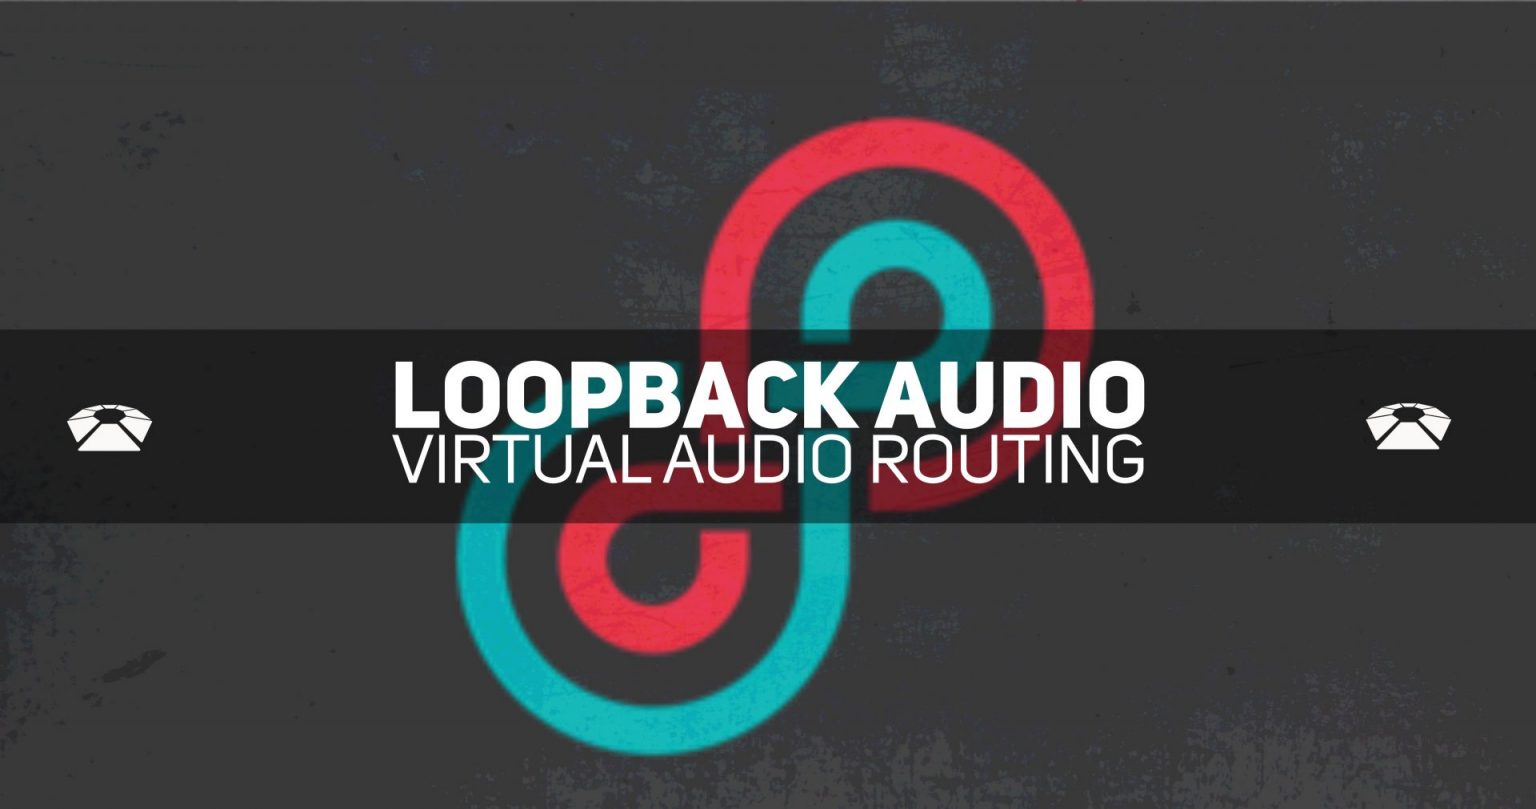 loopback app